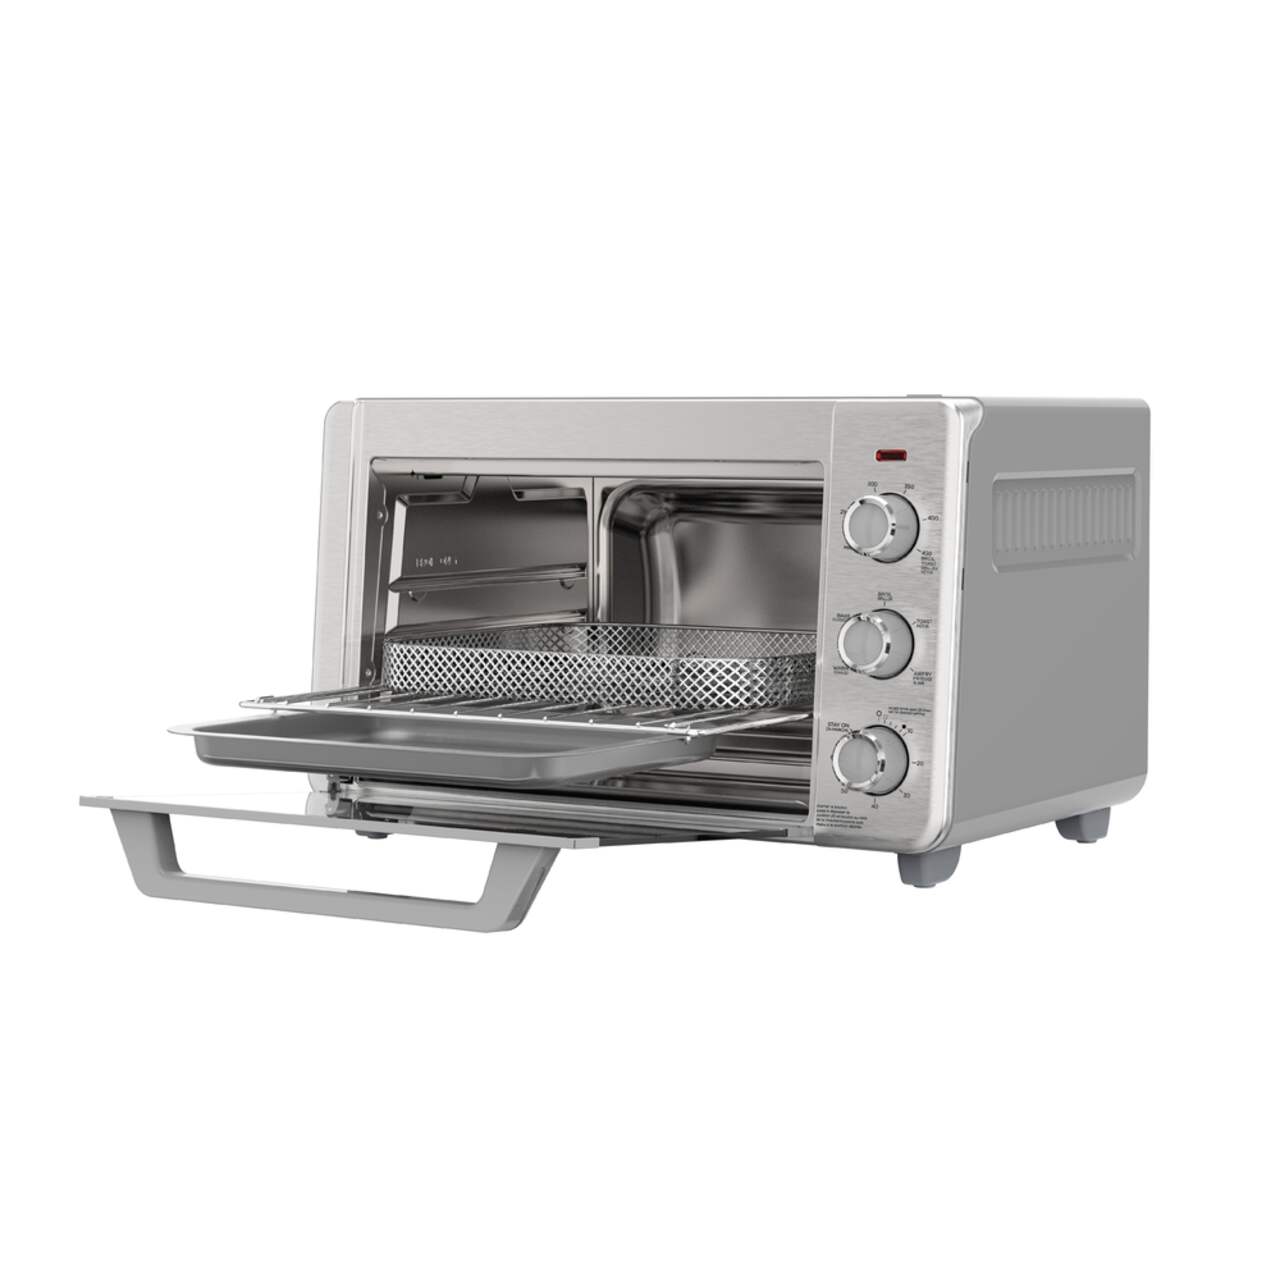 Black & Decker Crisp 'N bake 6-Slice Air Fryer Toaster Oven